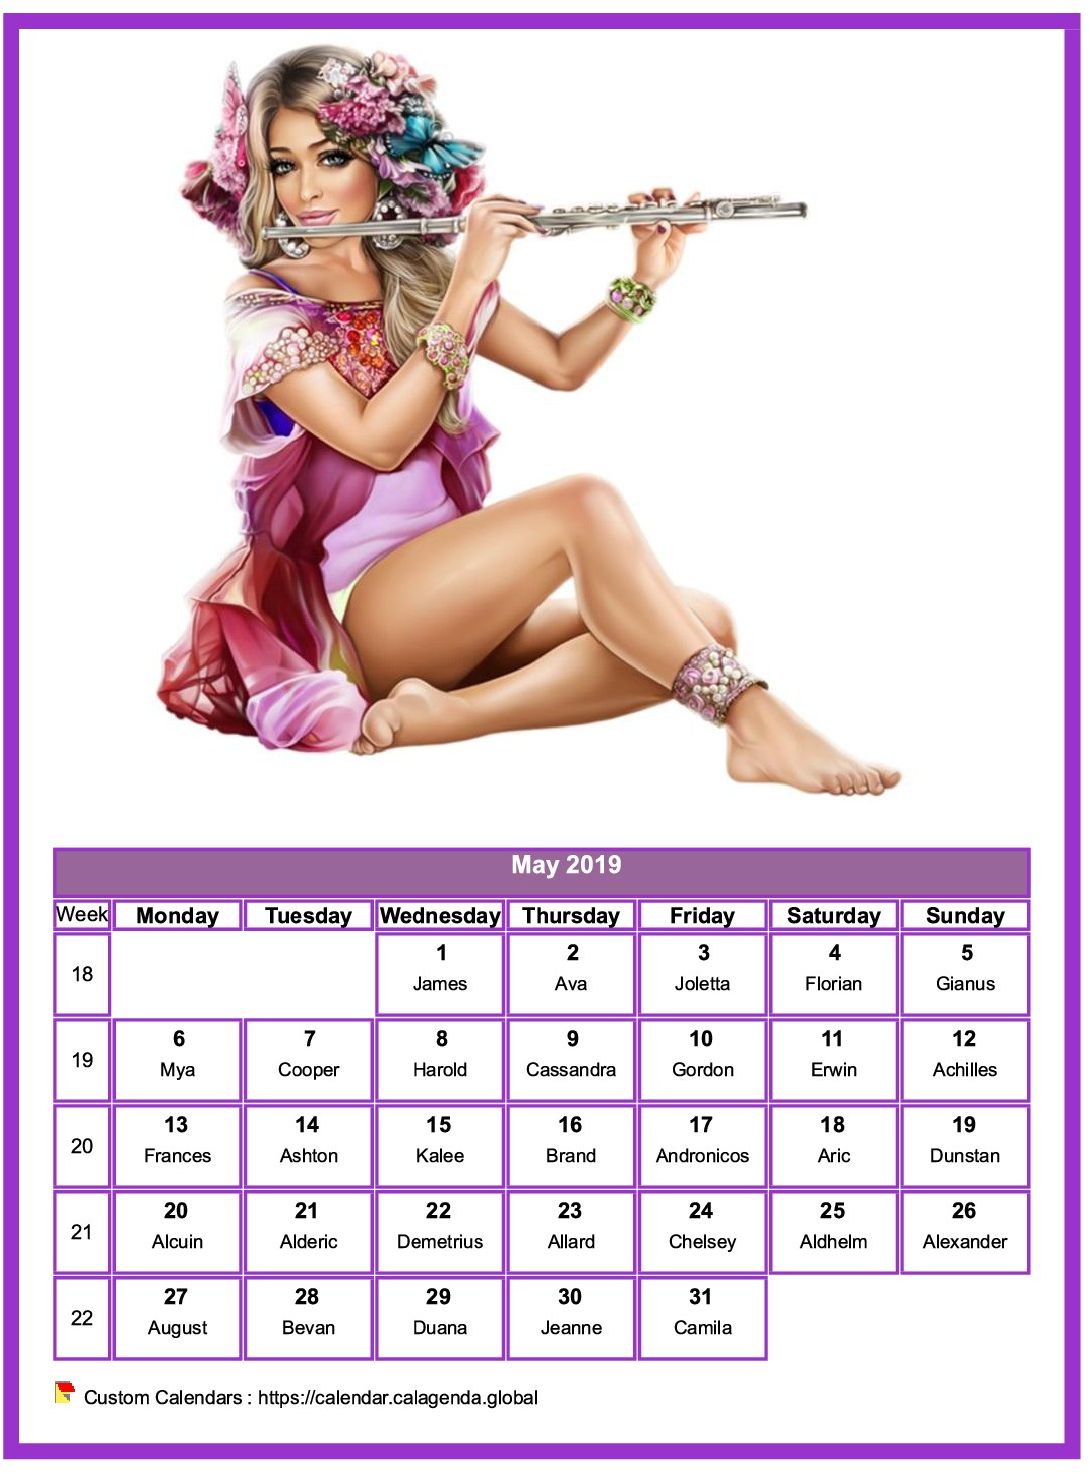 Calendar May 2019 women